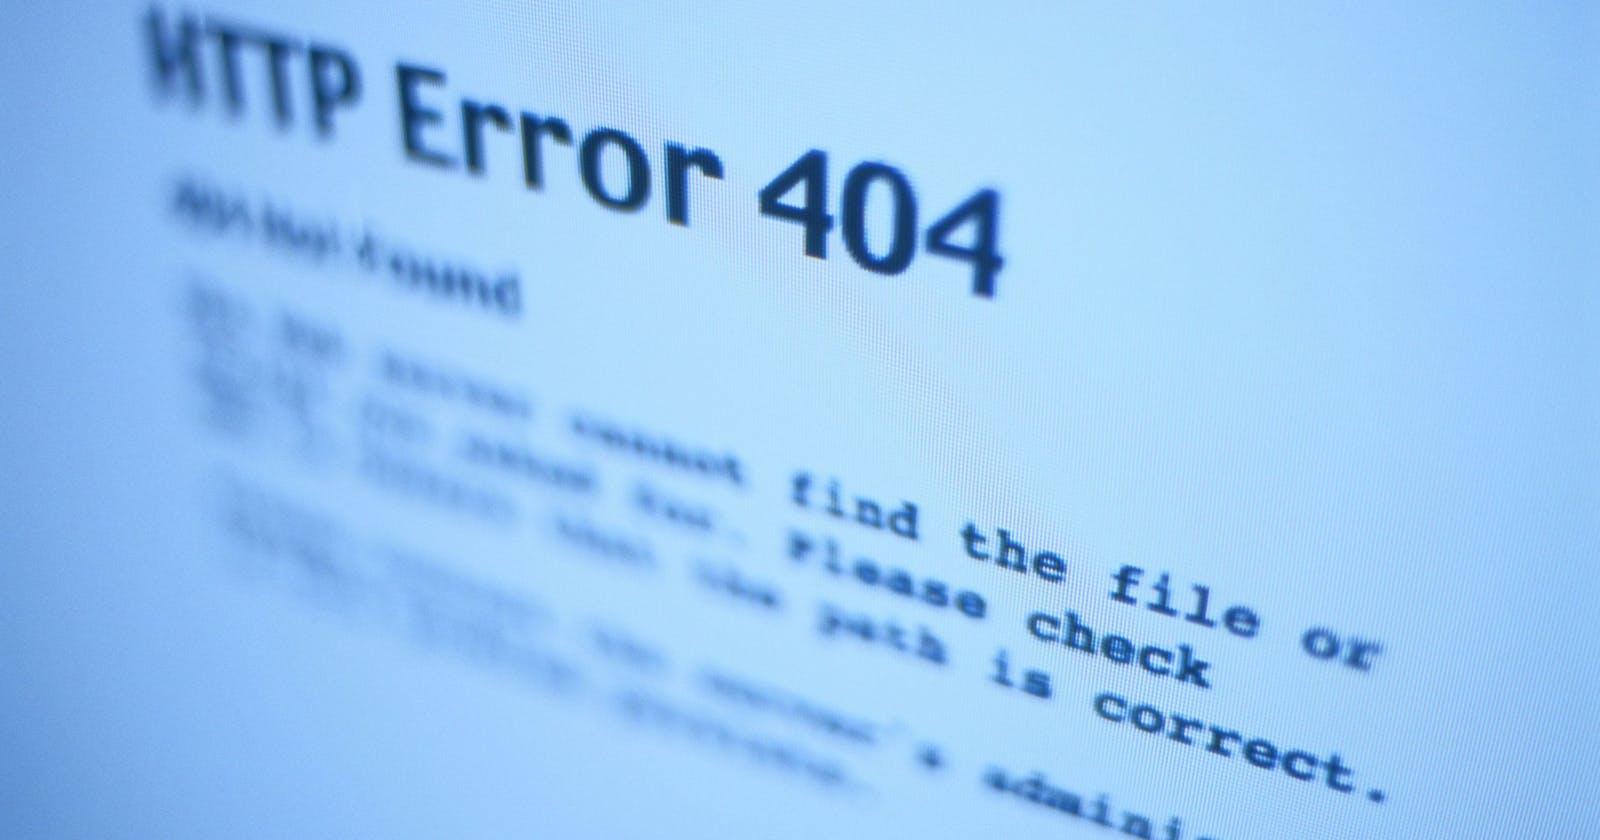 How to Fix WordPress HTTP Error While Uploading Image?